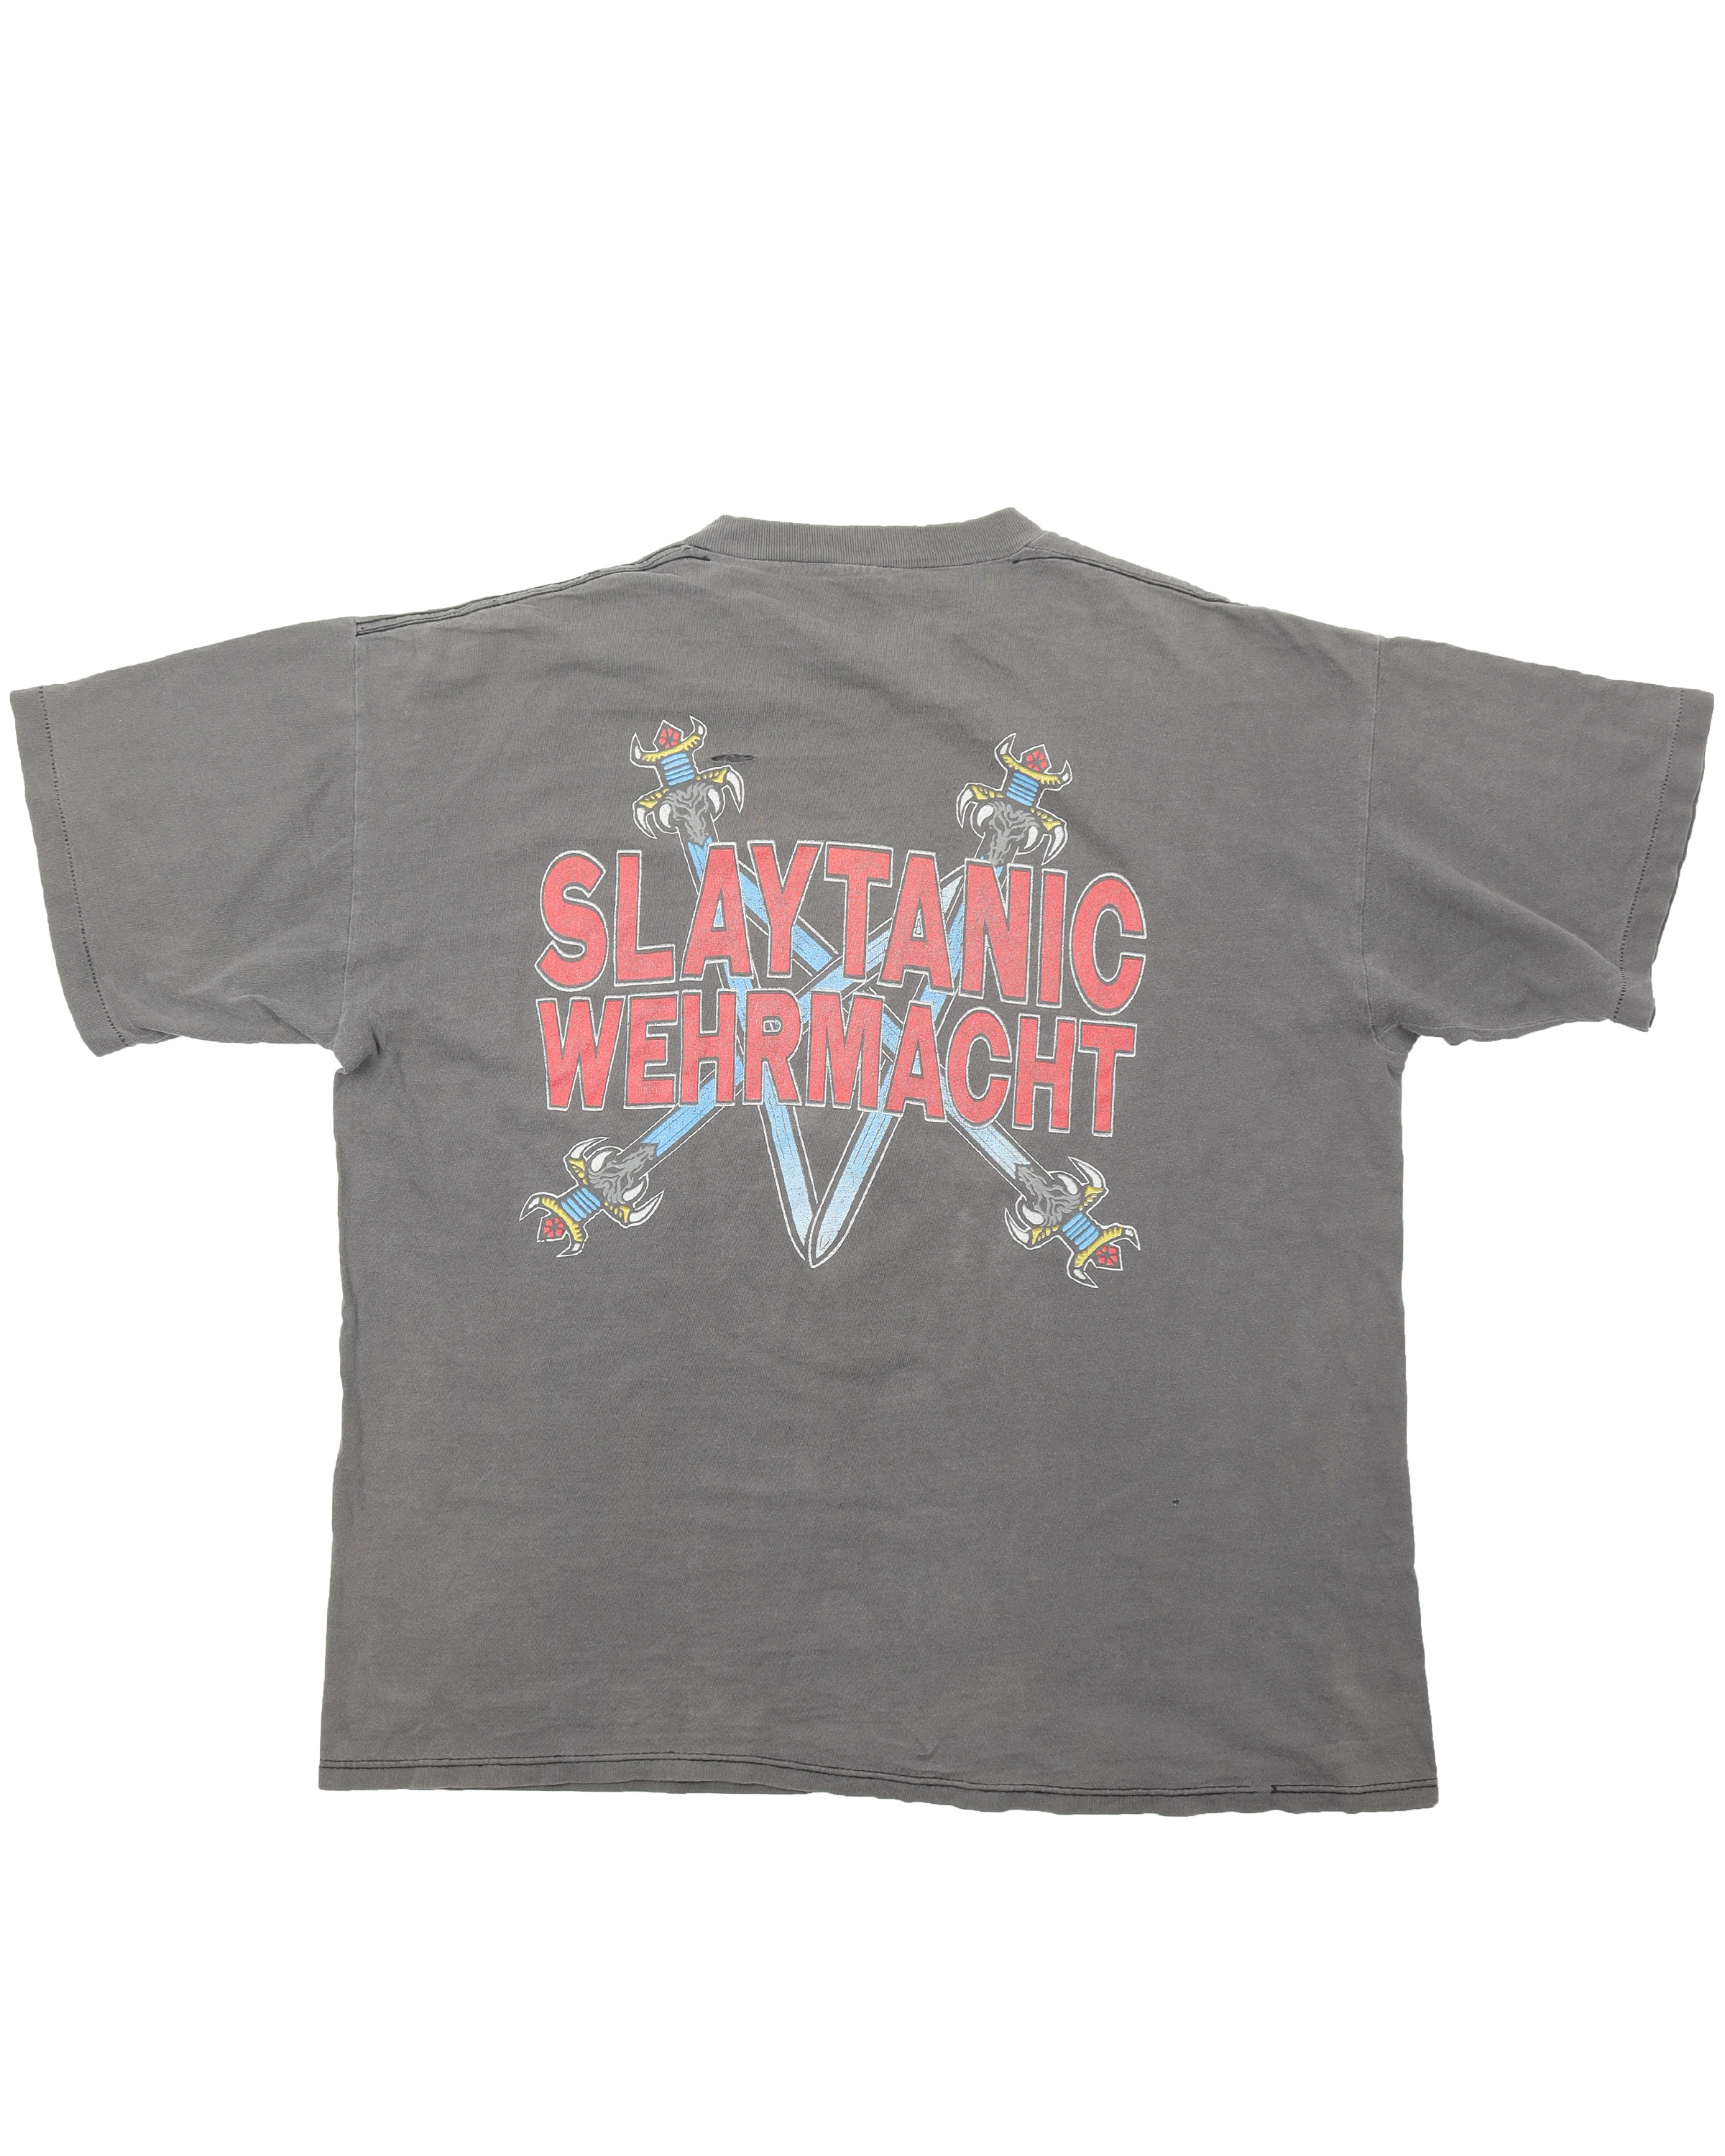 1990's SLAYER Slaytanic Wehermacht T-Shirt